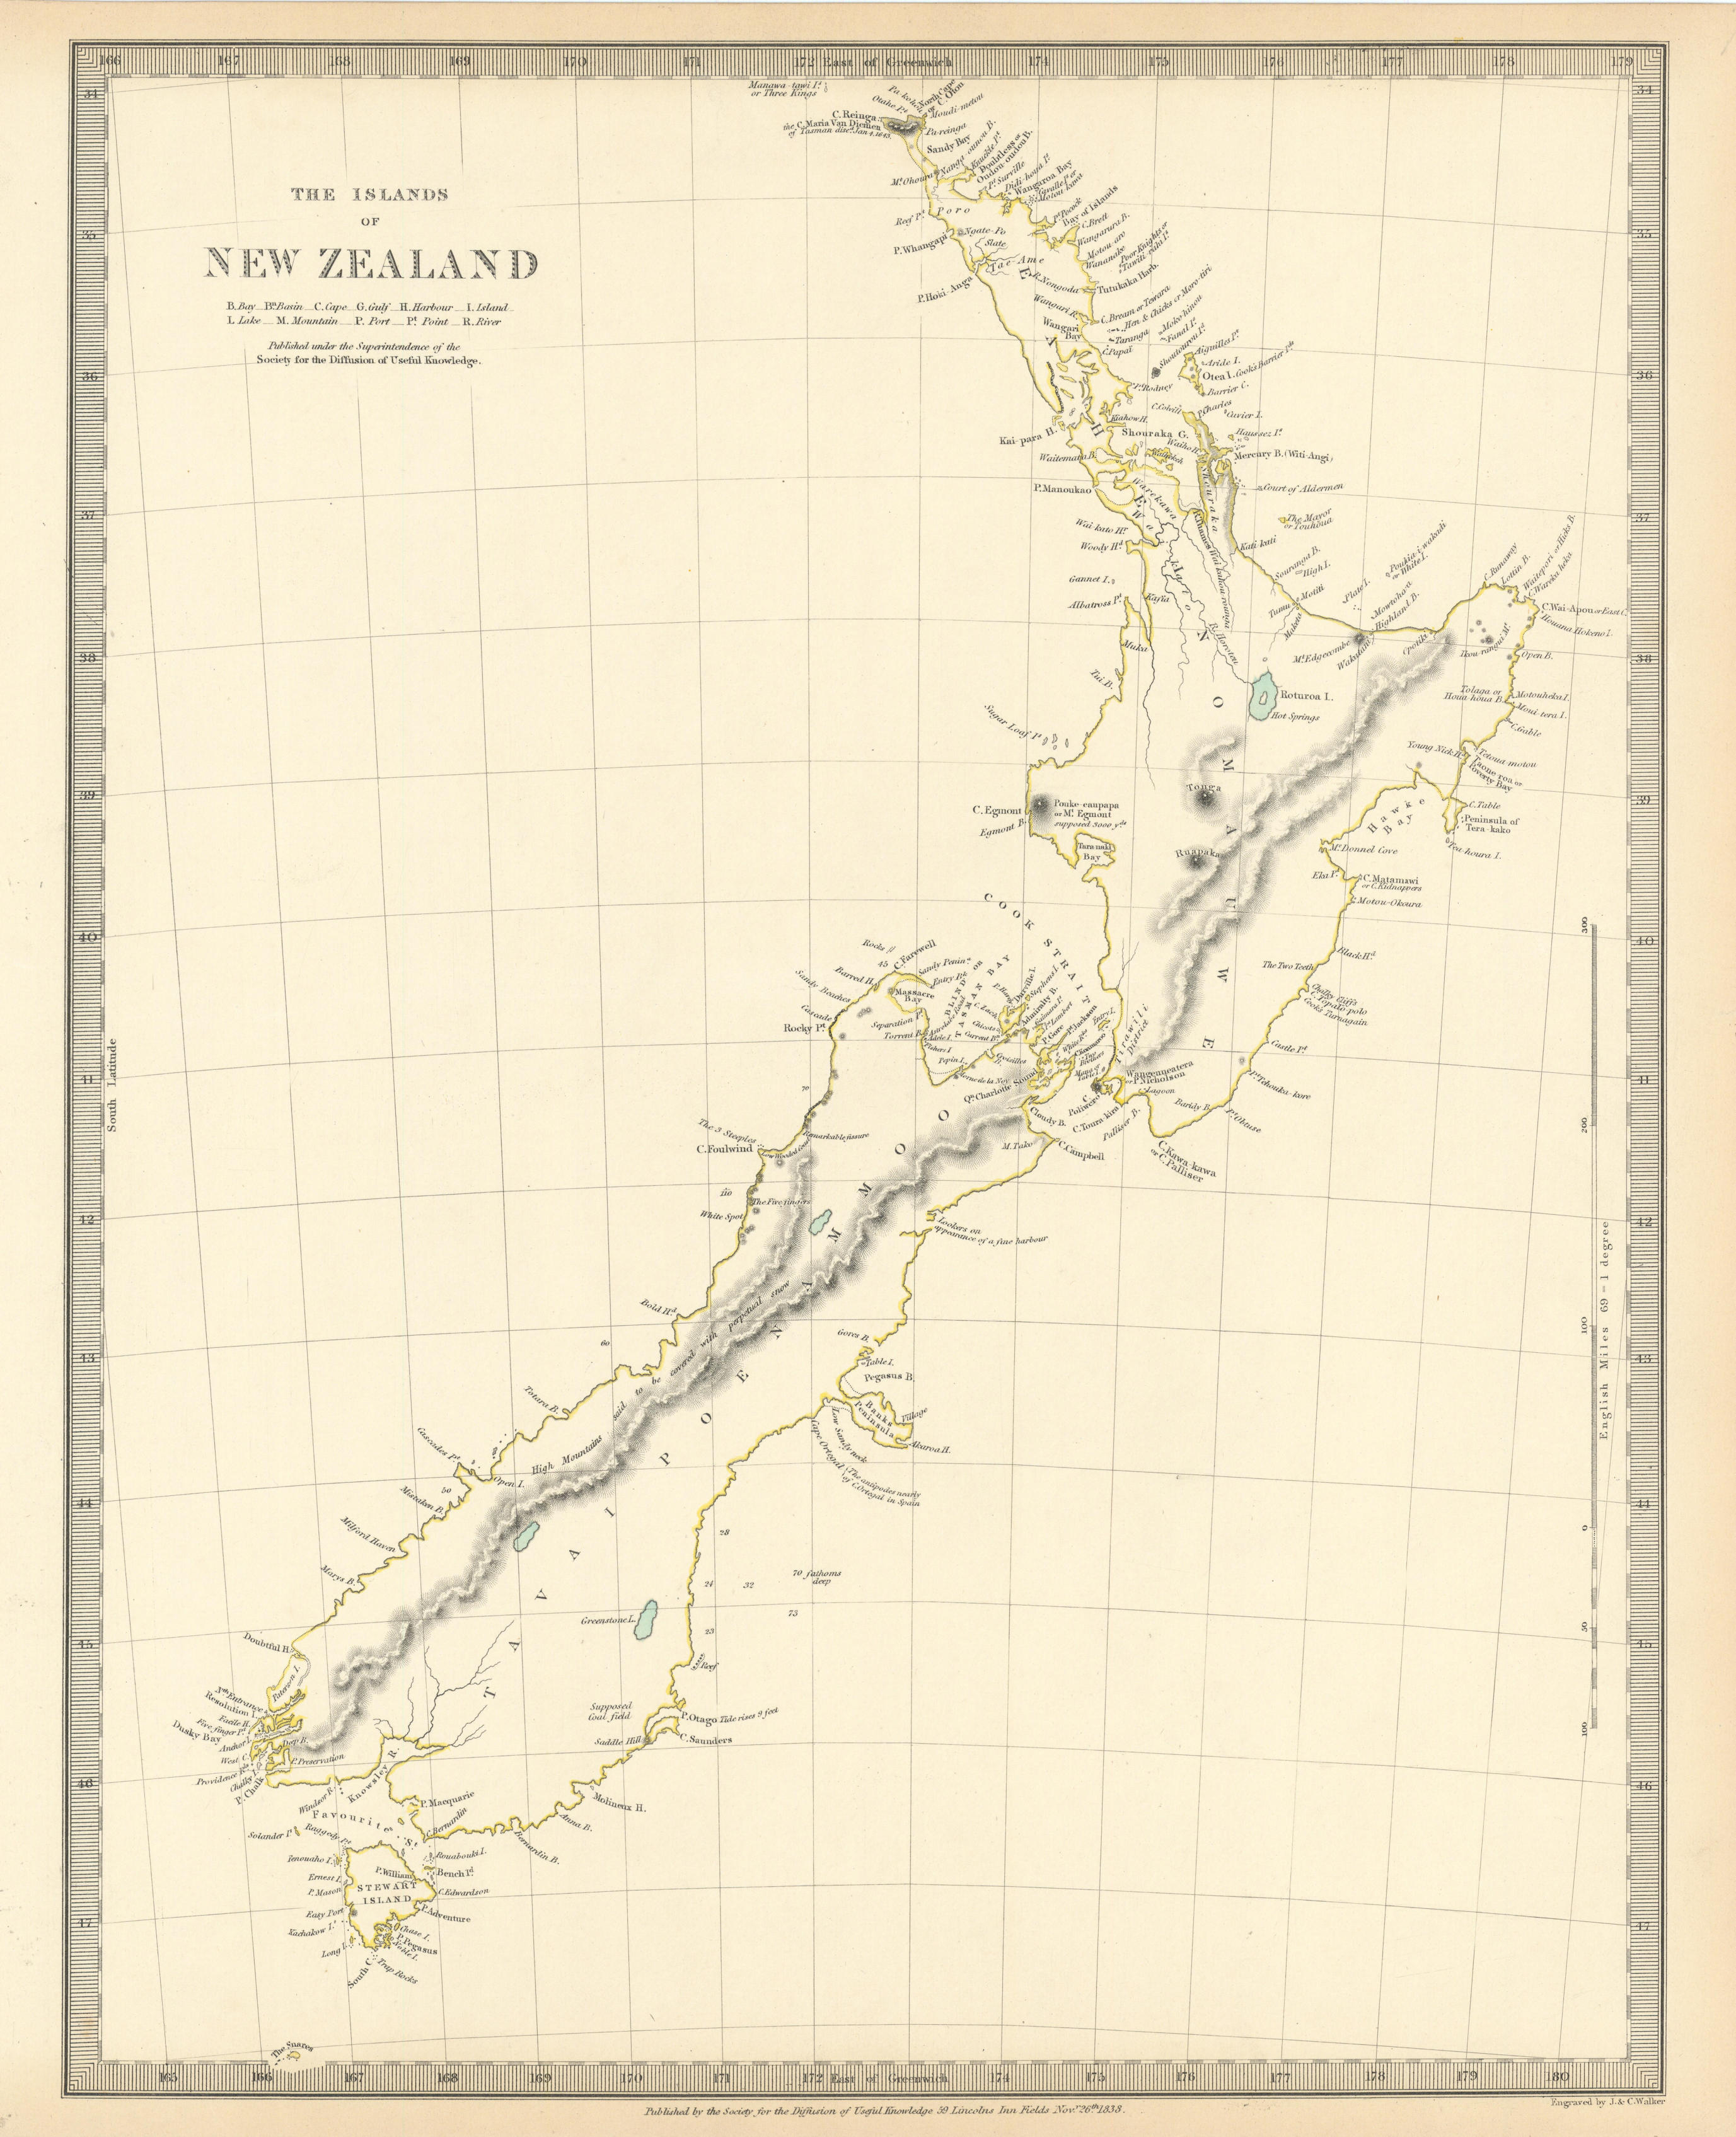 Associate Product NEW ZEALAND. The Islands of. Tavai Poenammoo Eaheinomauwe. SDUK 1844 old map